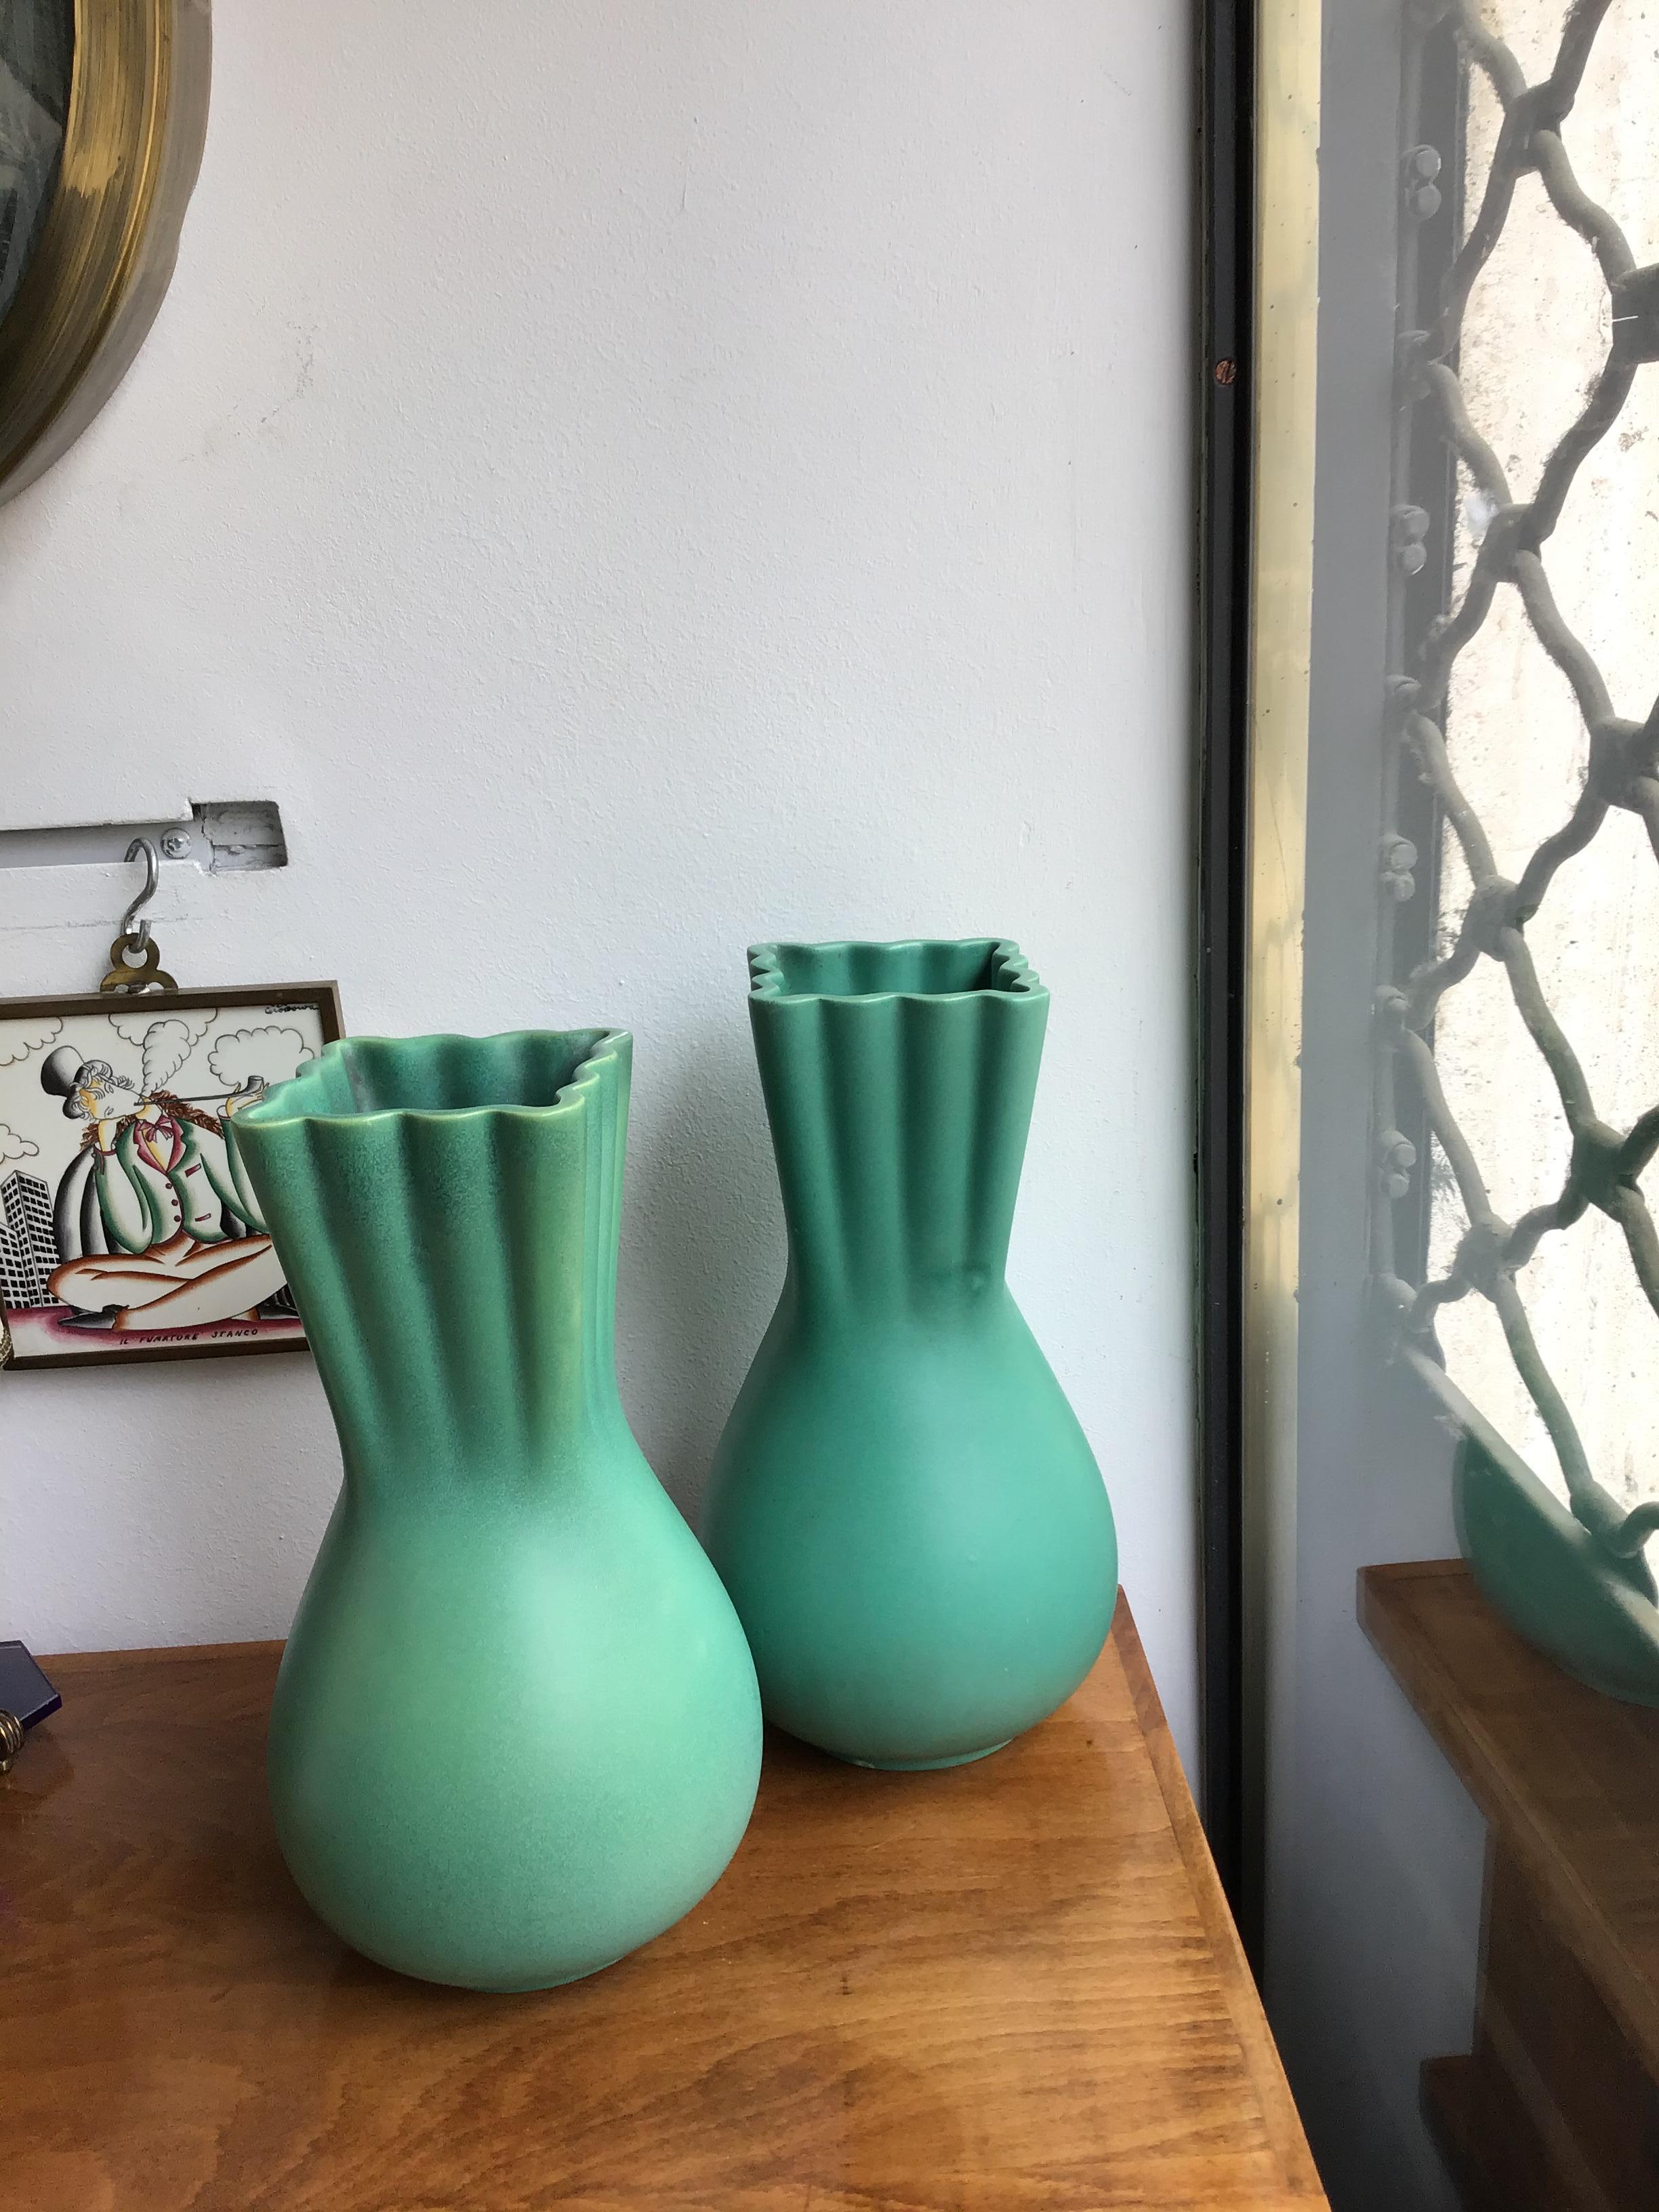 Richard Ginori Giovanni Gariboldi Green Vase Ceramic, 1950, Italy For Sale 8